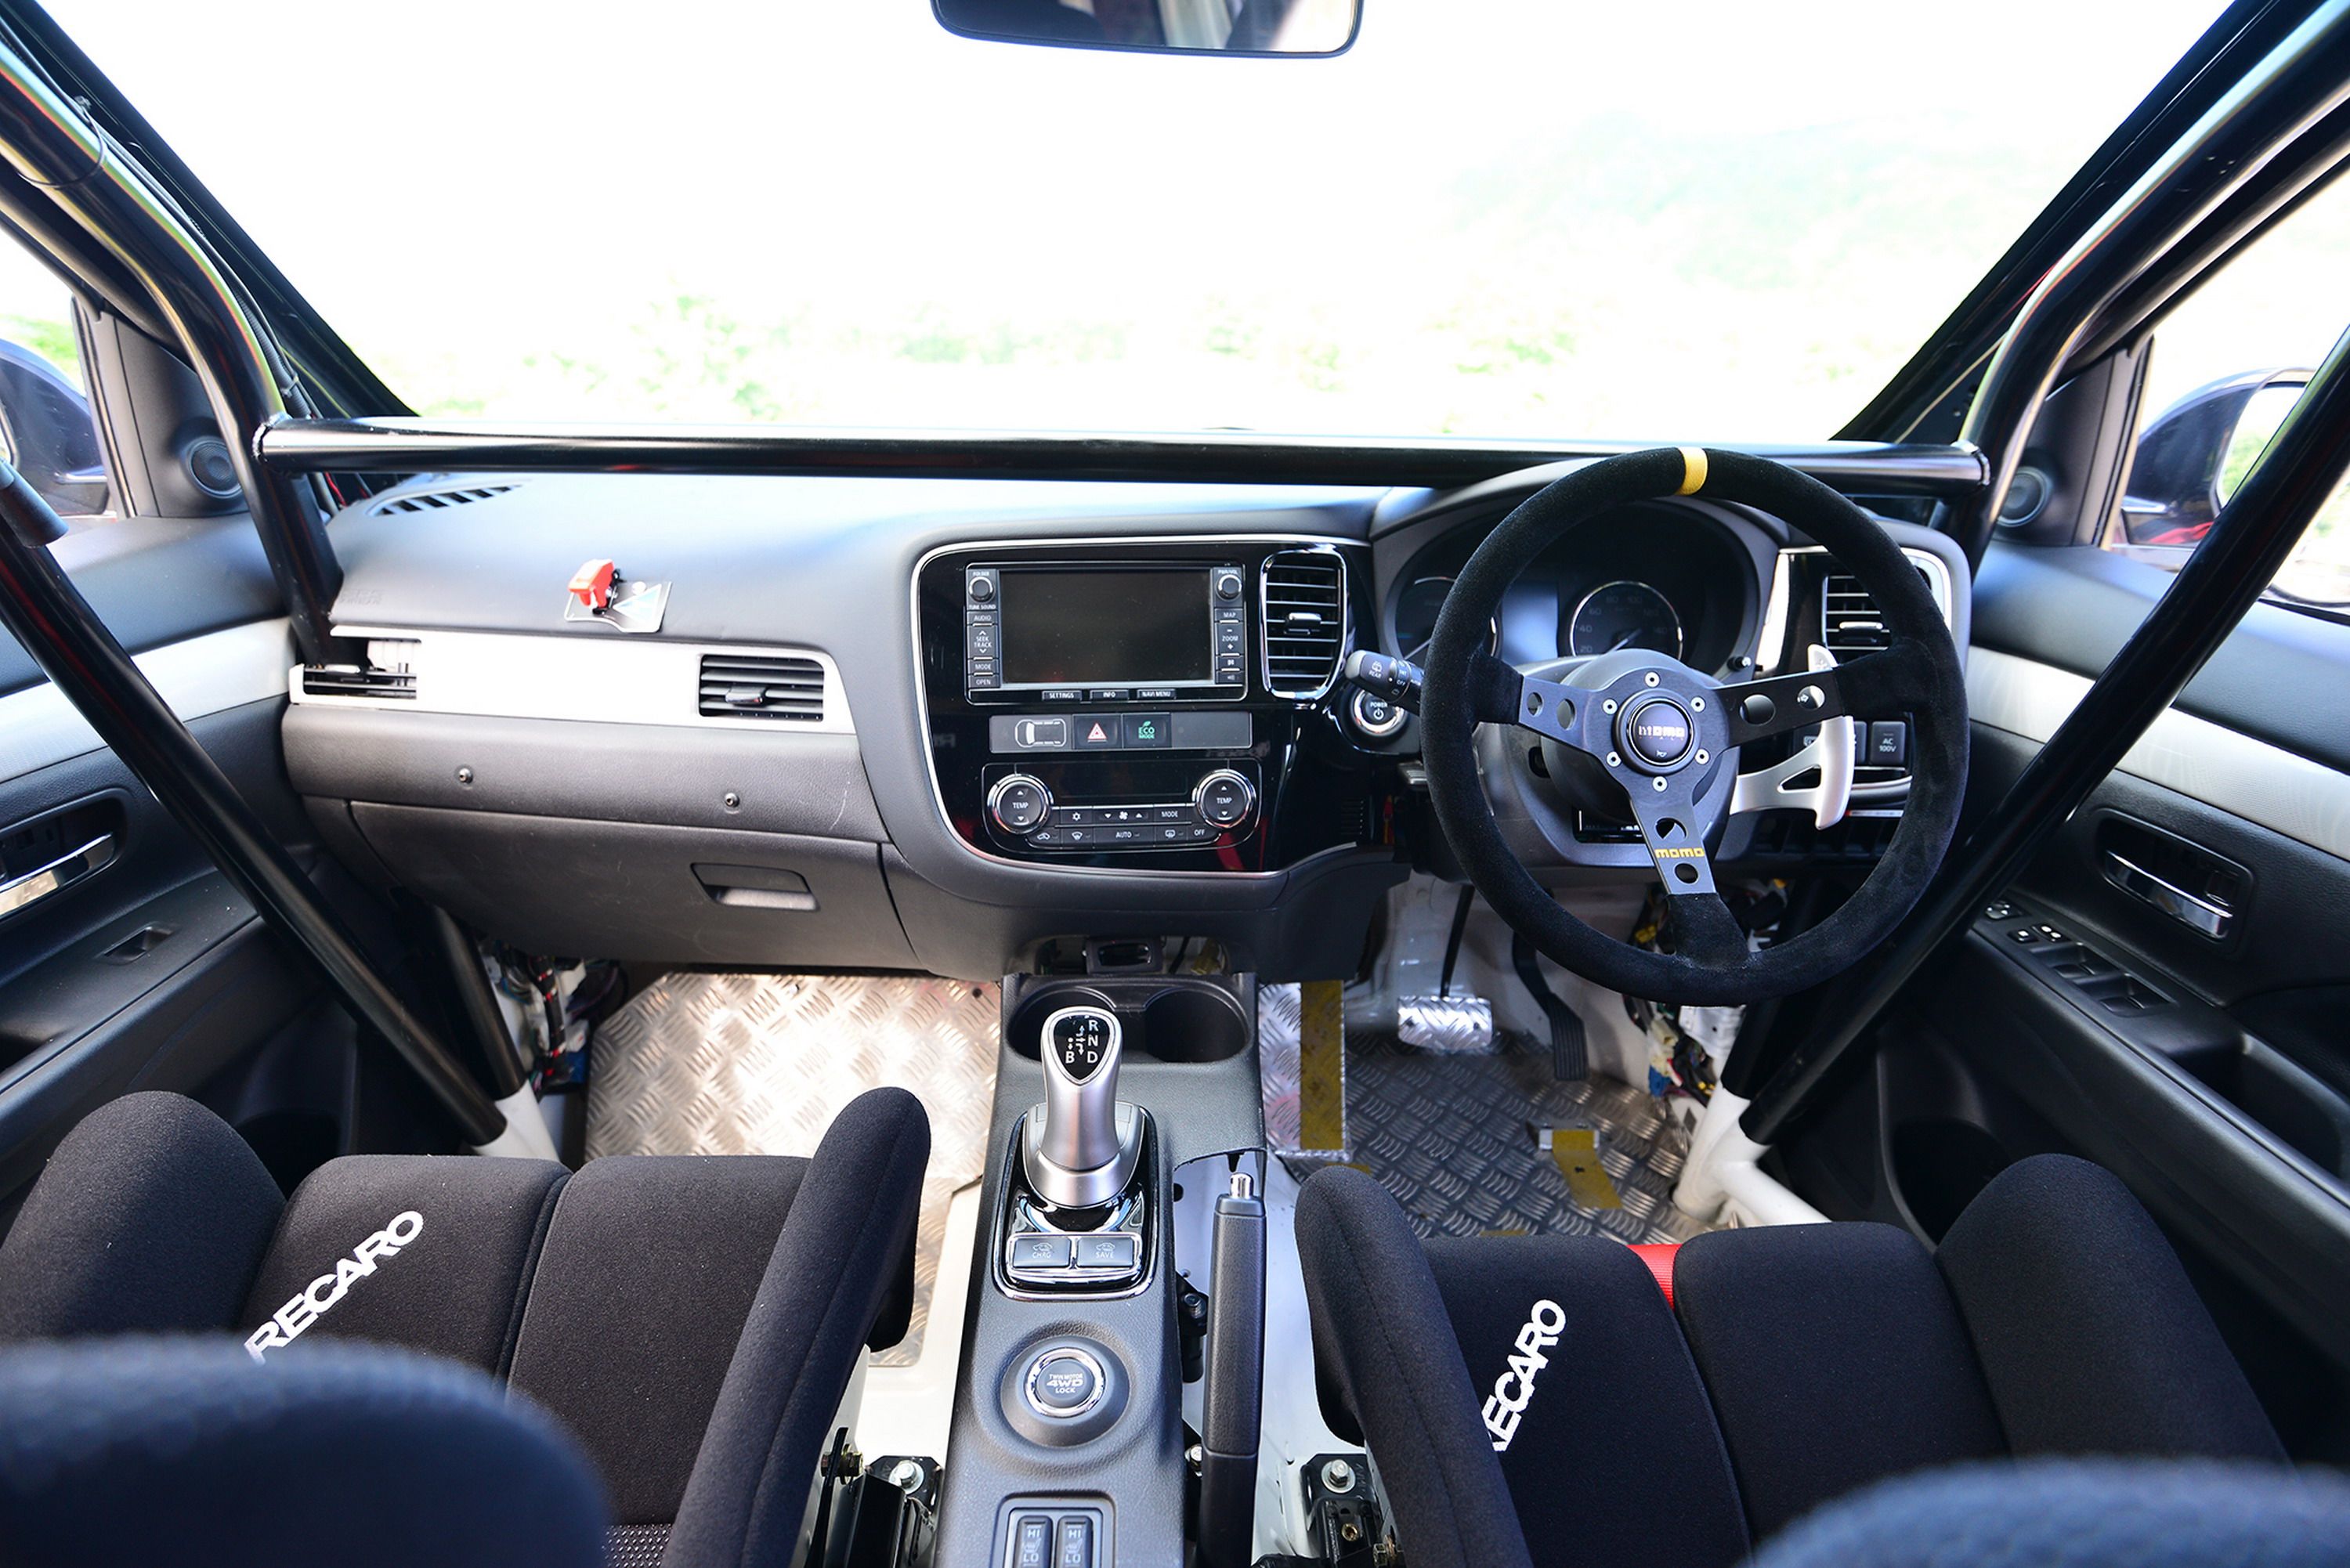 2016 Mitsubishi Outlander PHEV Baja Race Car